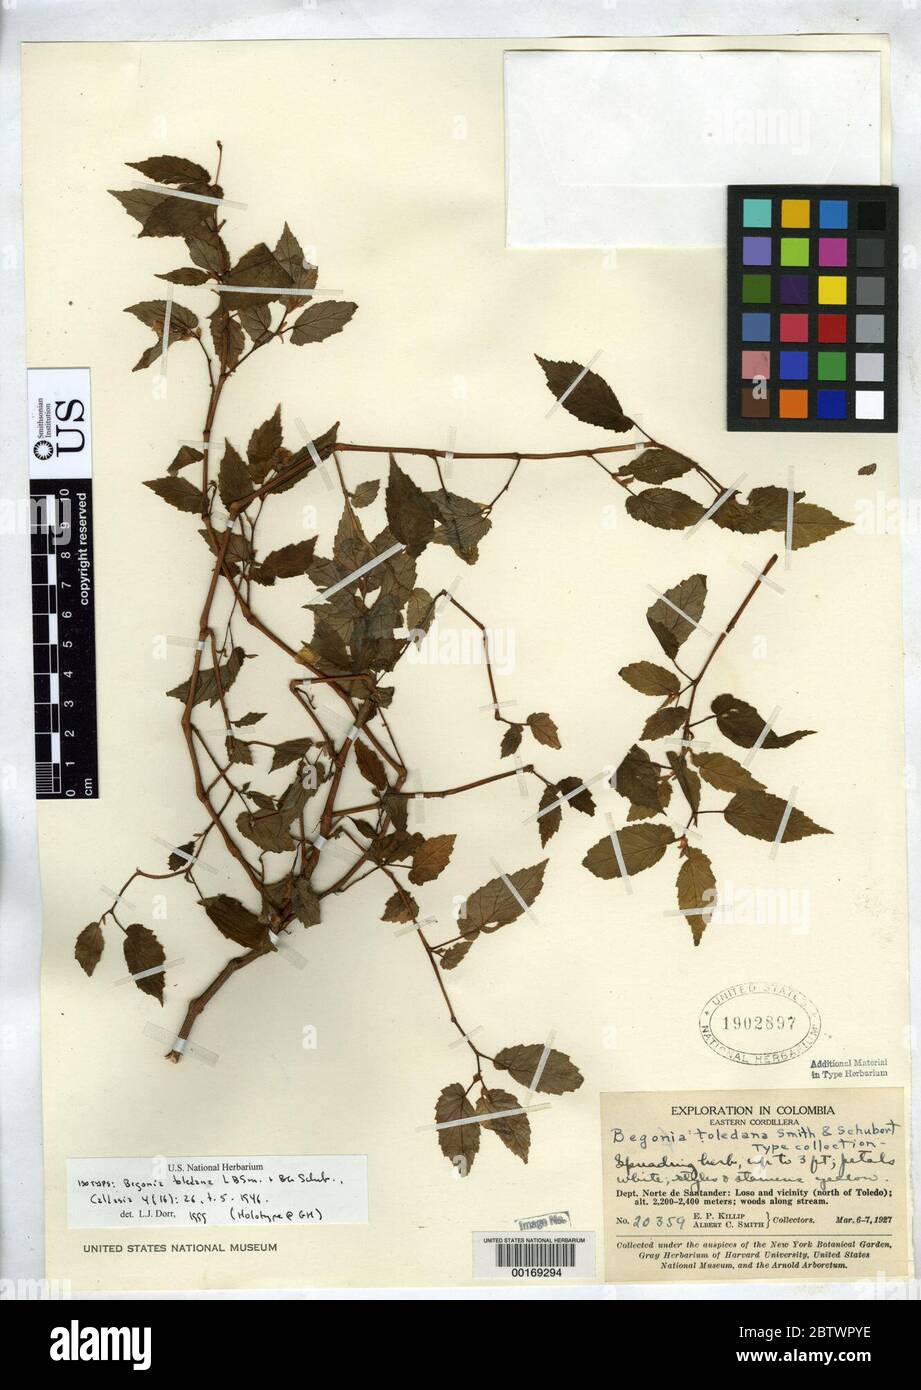 Begonia toledana LB Sm BG Schub. Stock Photo